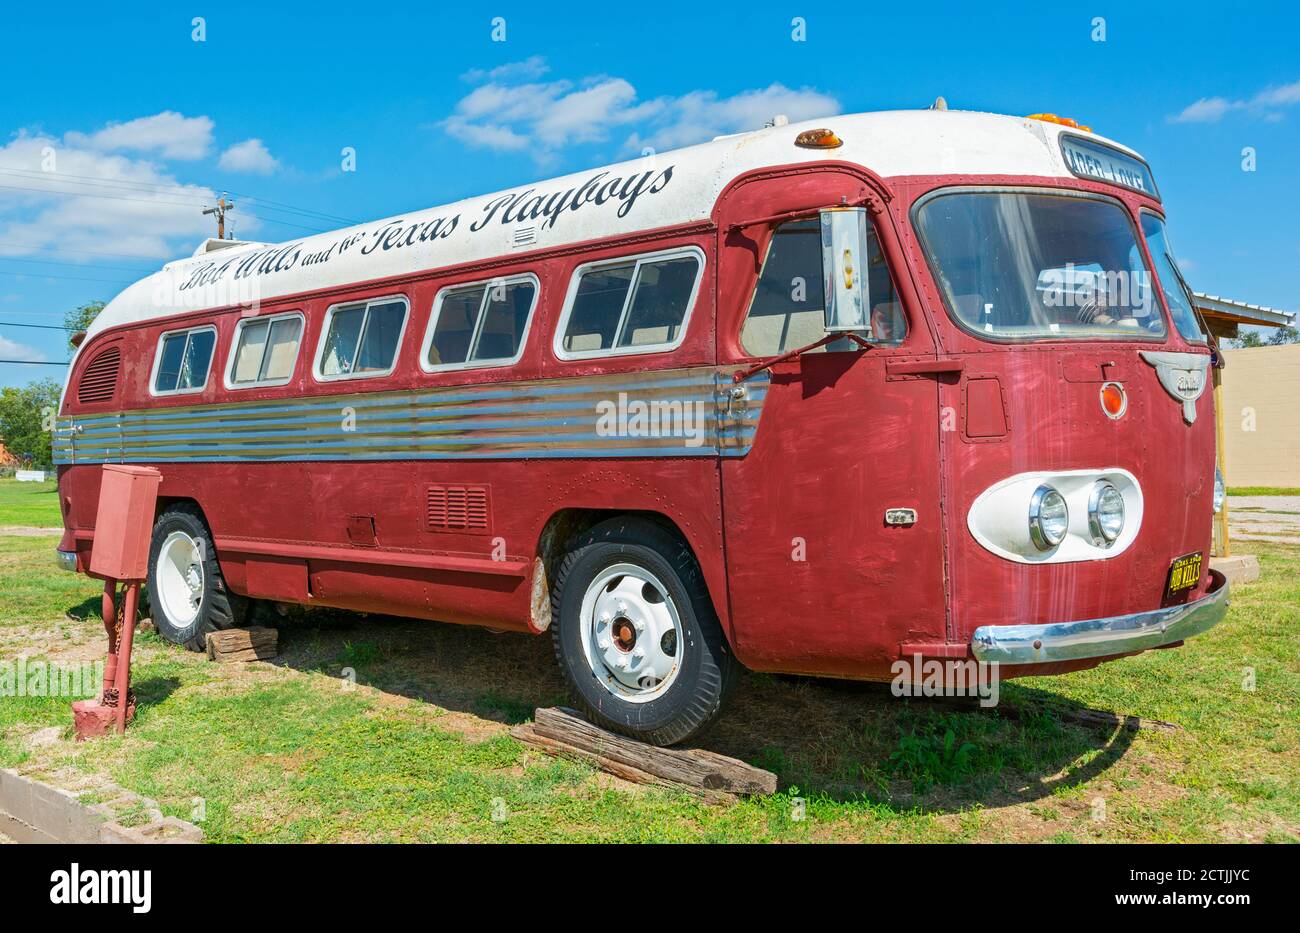 Texas, Hall County, Turkey, Bob Wills and his Texas Playboys tour bus Stock Photo